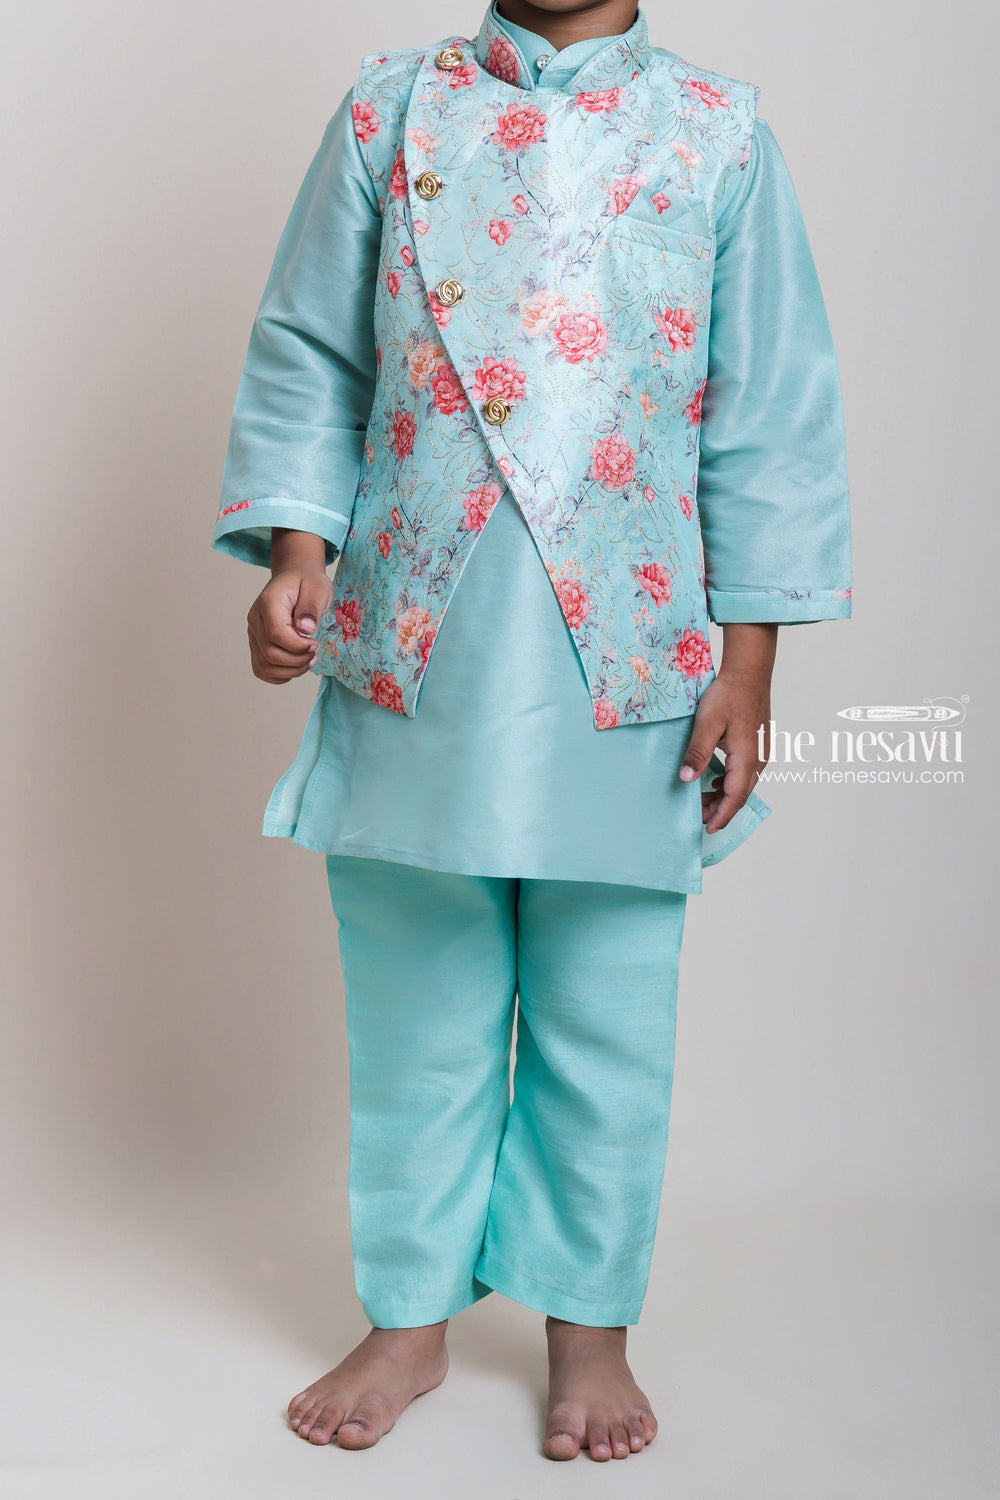 The Nesavu Boys Jacket Sets Spell Binding Three Piece Green Kurta And Floral Printed Overcoat For Little Boys Nesavu Shop Kurta Dresses For Boys | Party Wear Kurta Online | The Nesavu